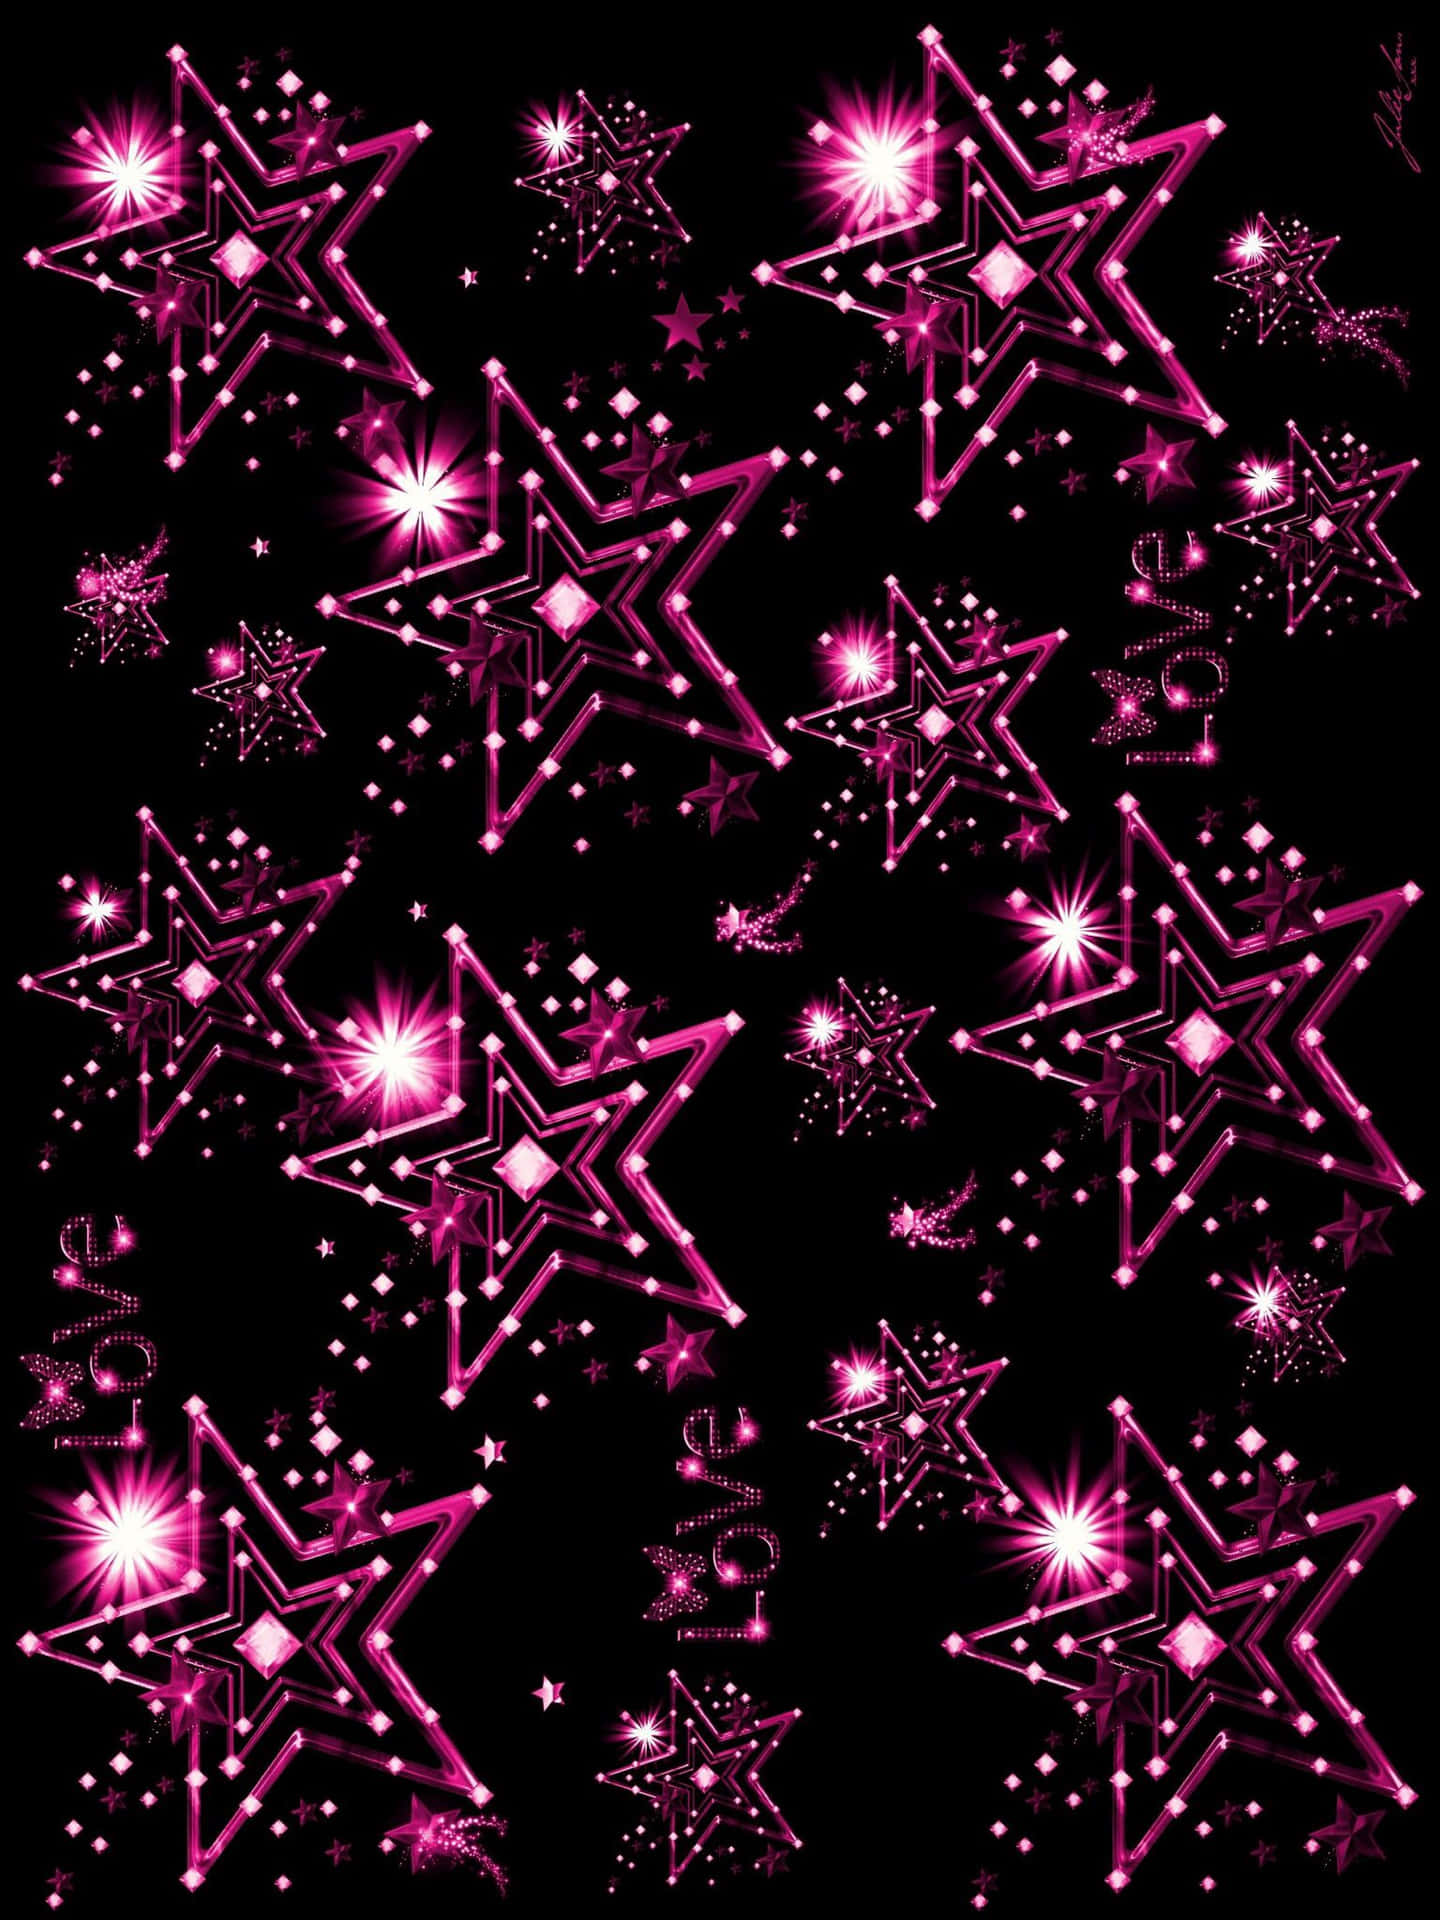 Pink Stars - A Vibrant Cosmic Dream